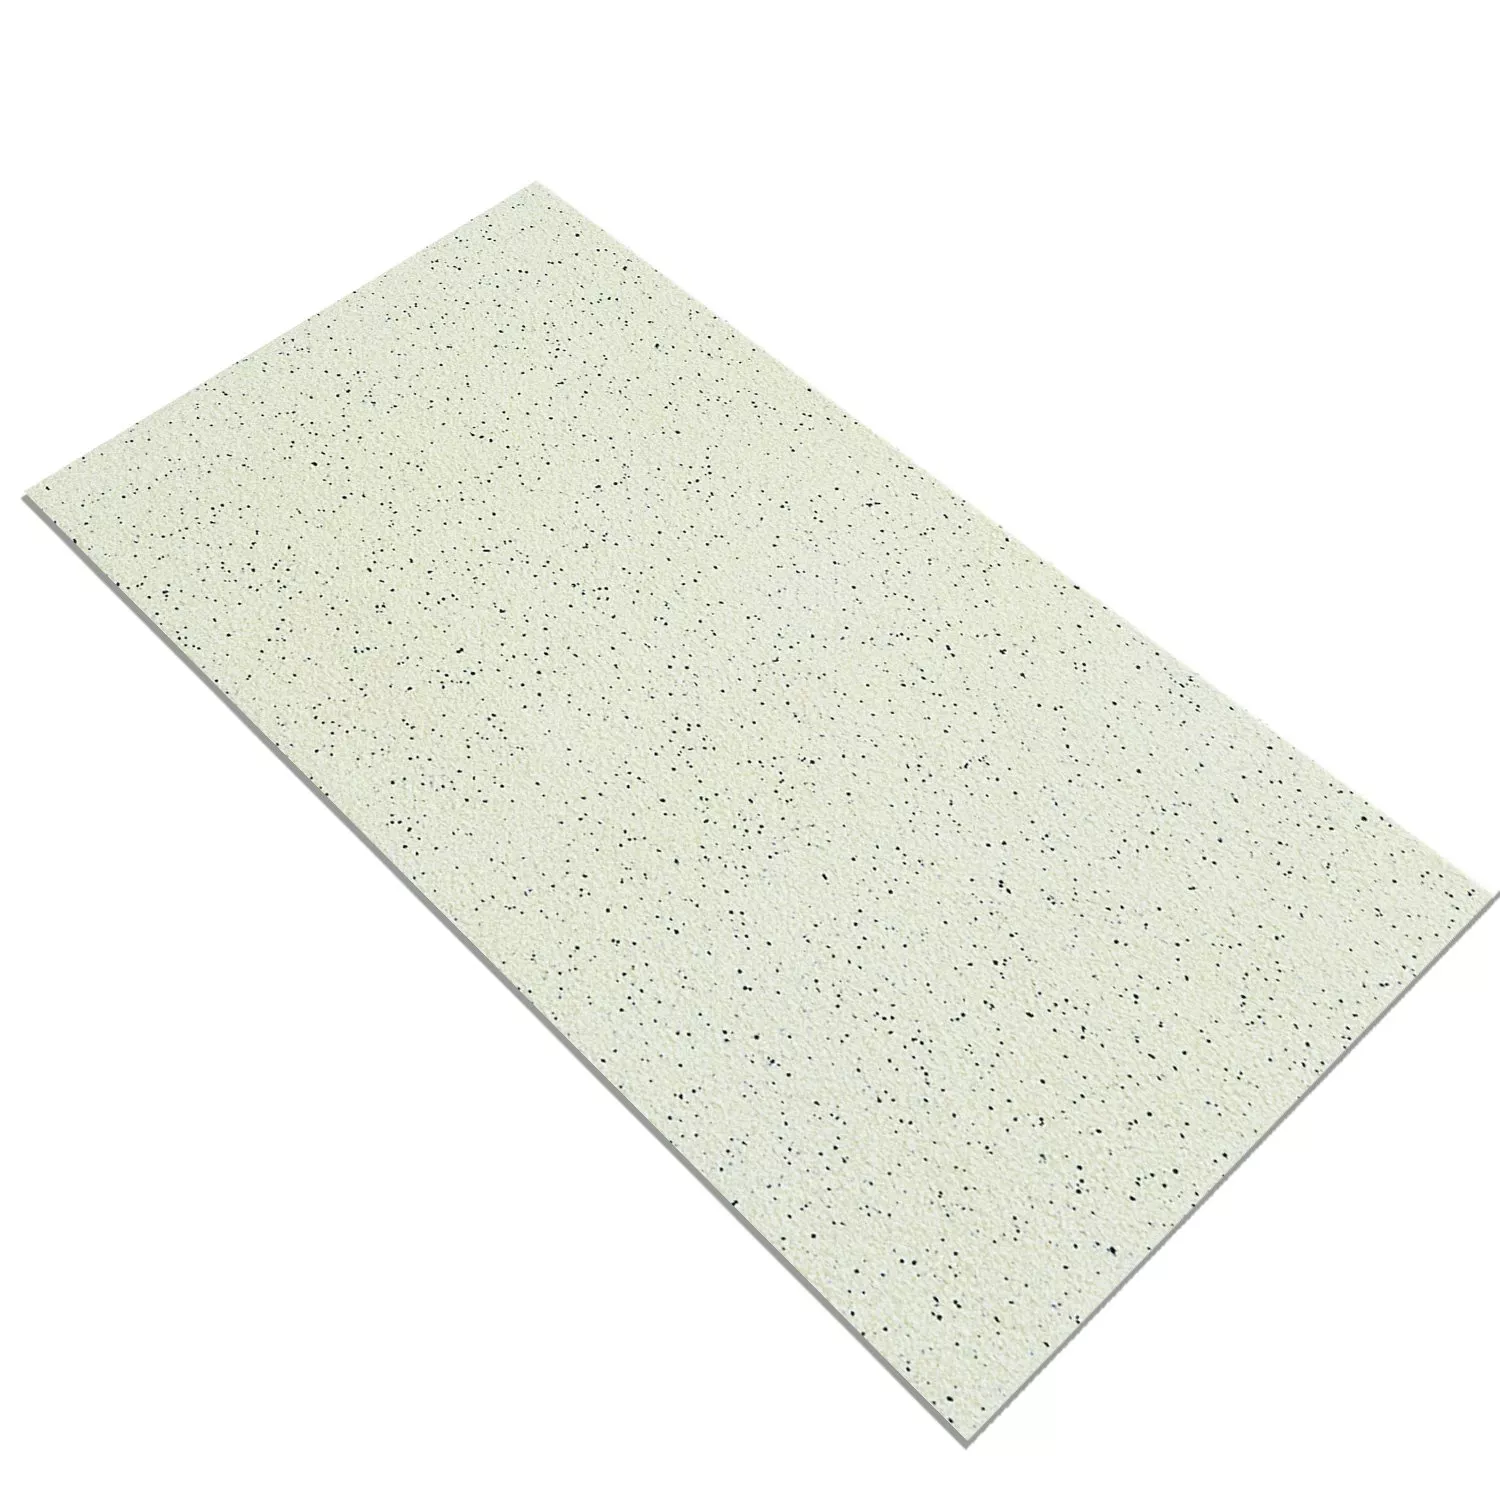 Sample Floor Tiles Fine Grain R10/A Creme 30x60cm